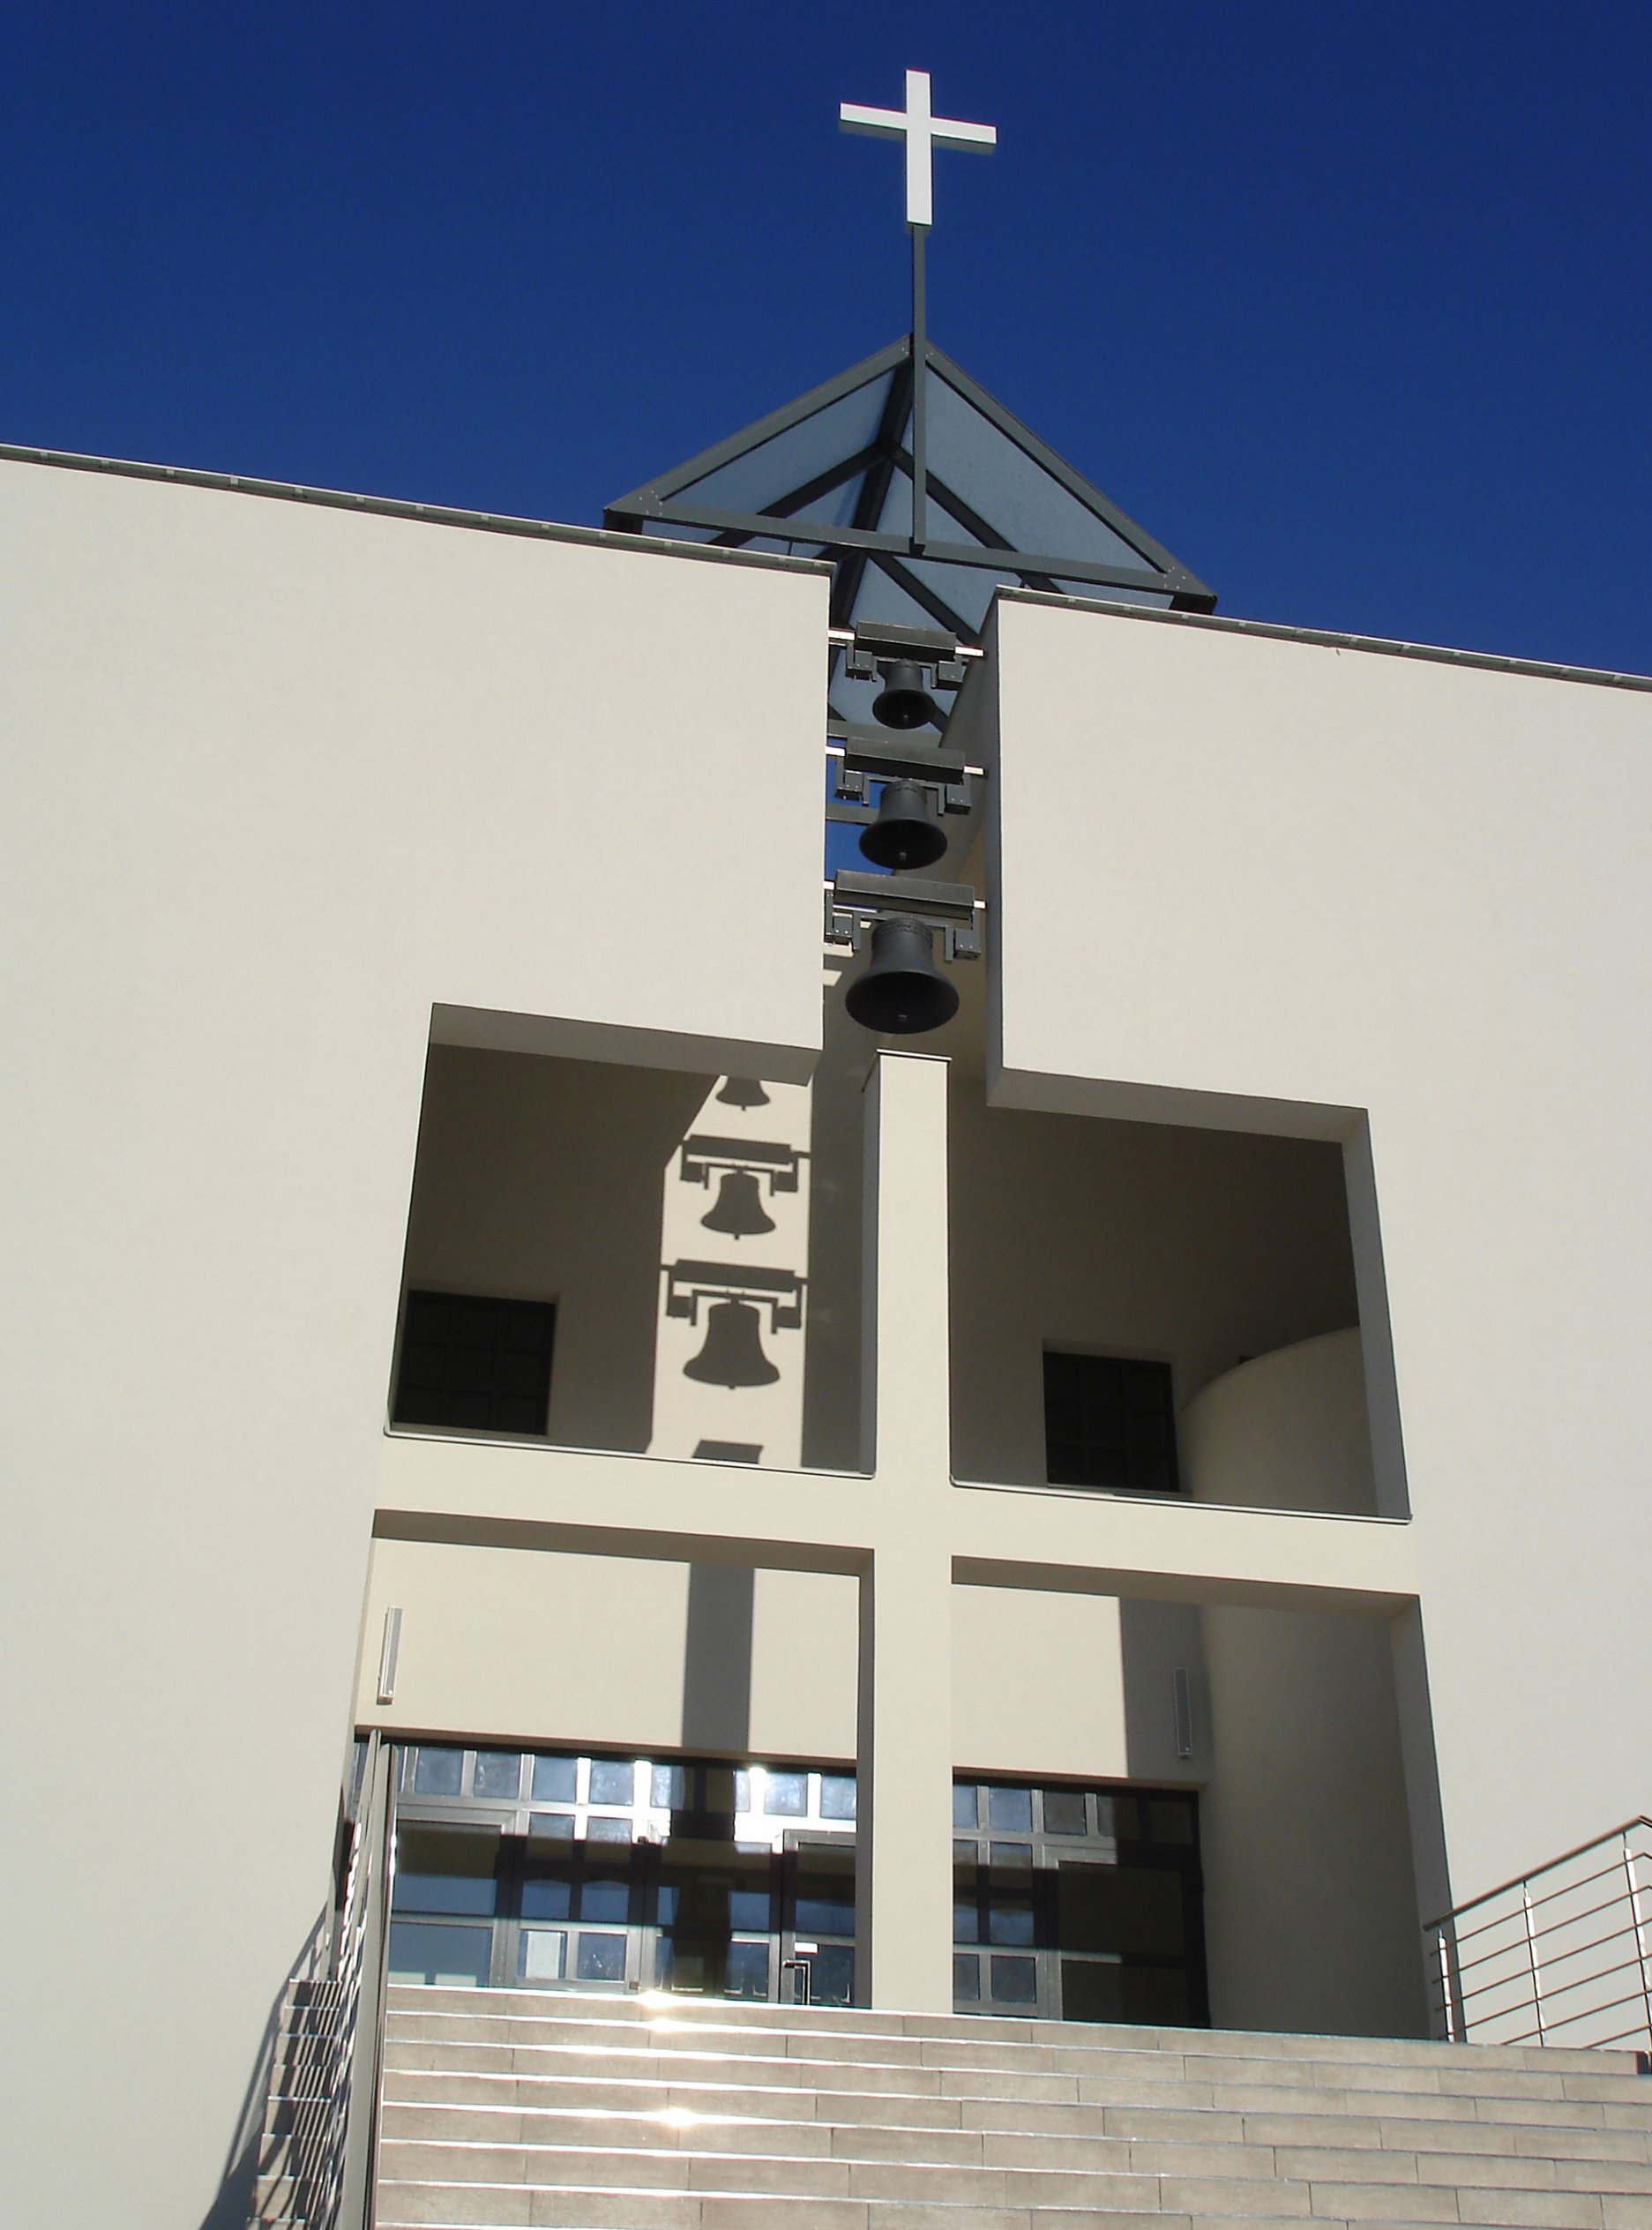 Kostol vo Vígľaši - detail zvonice